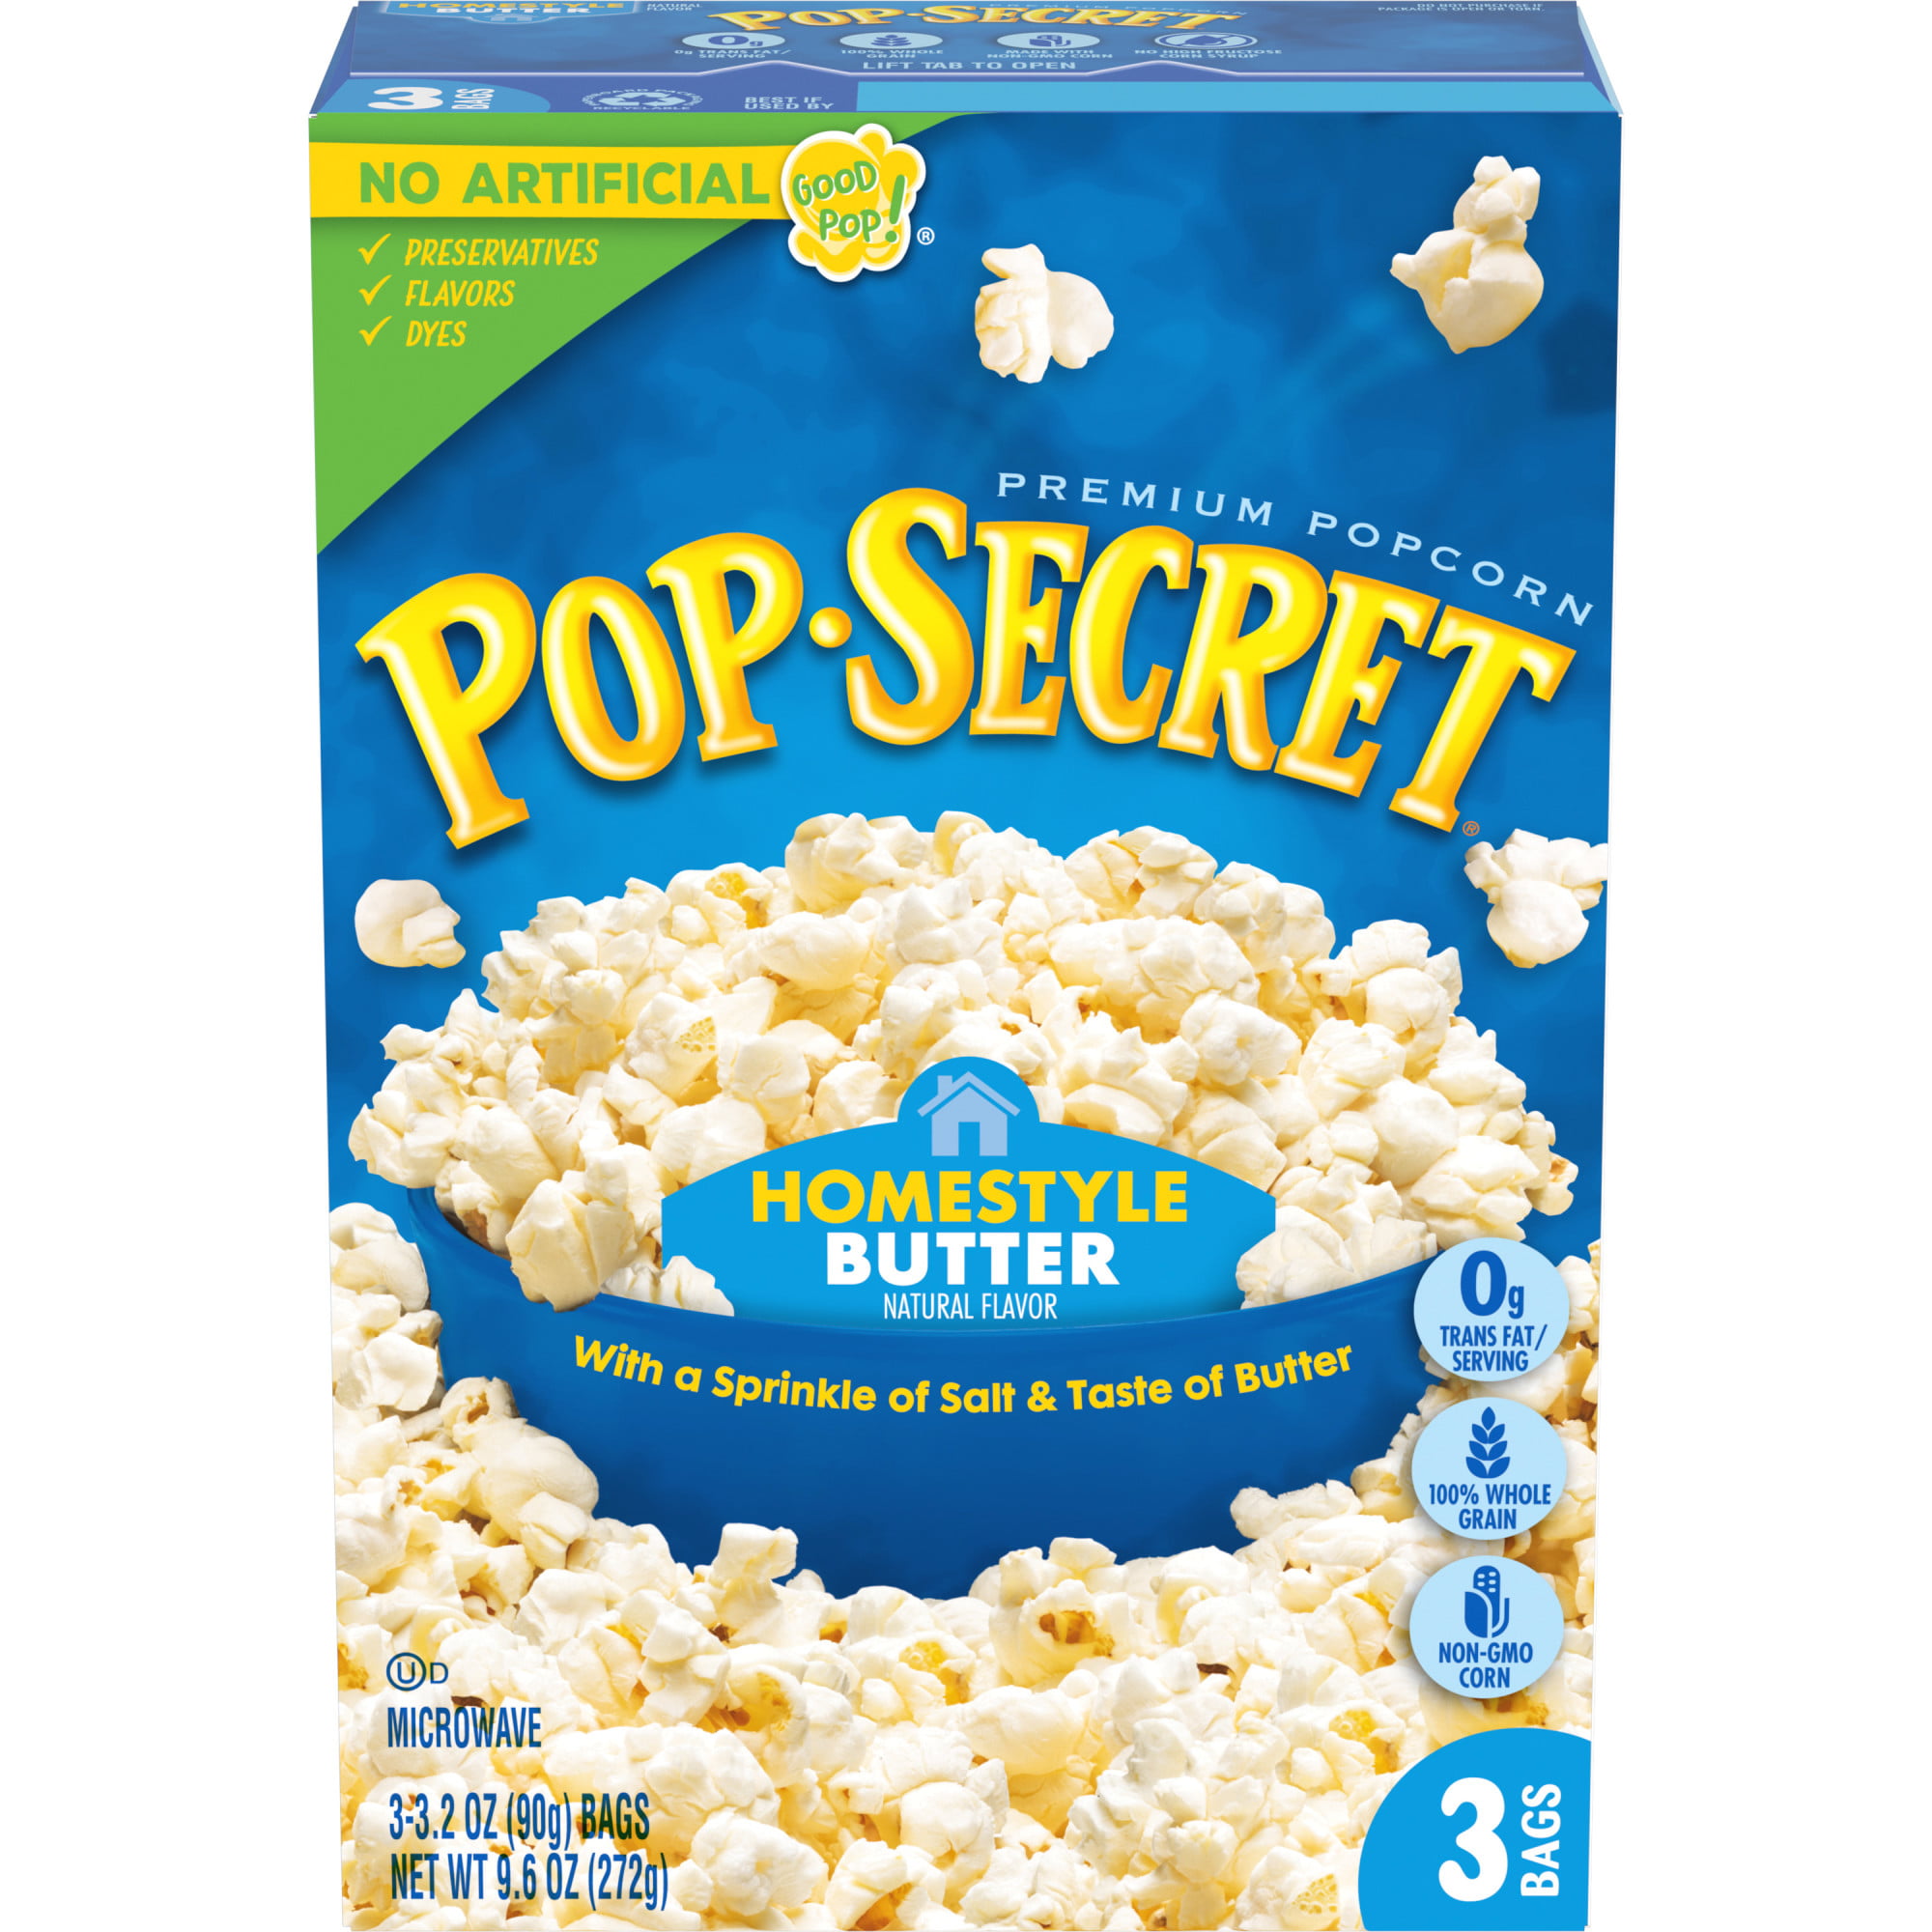 Pop Secret Popcorn, Homestyle Butter Microwave Popcorn, 3.2 oz Sharing